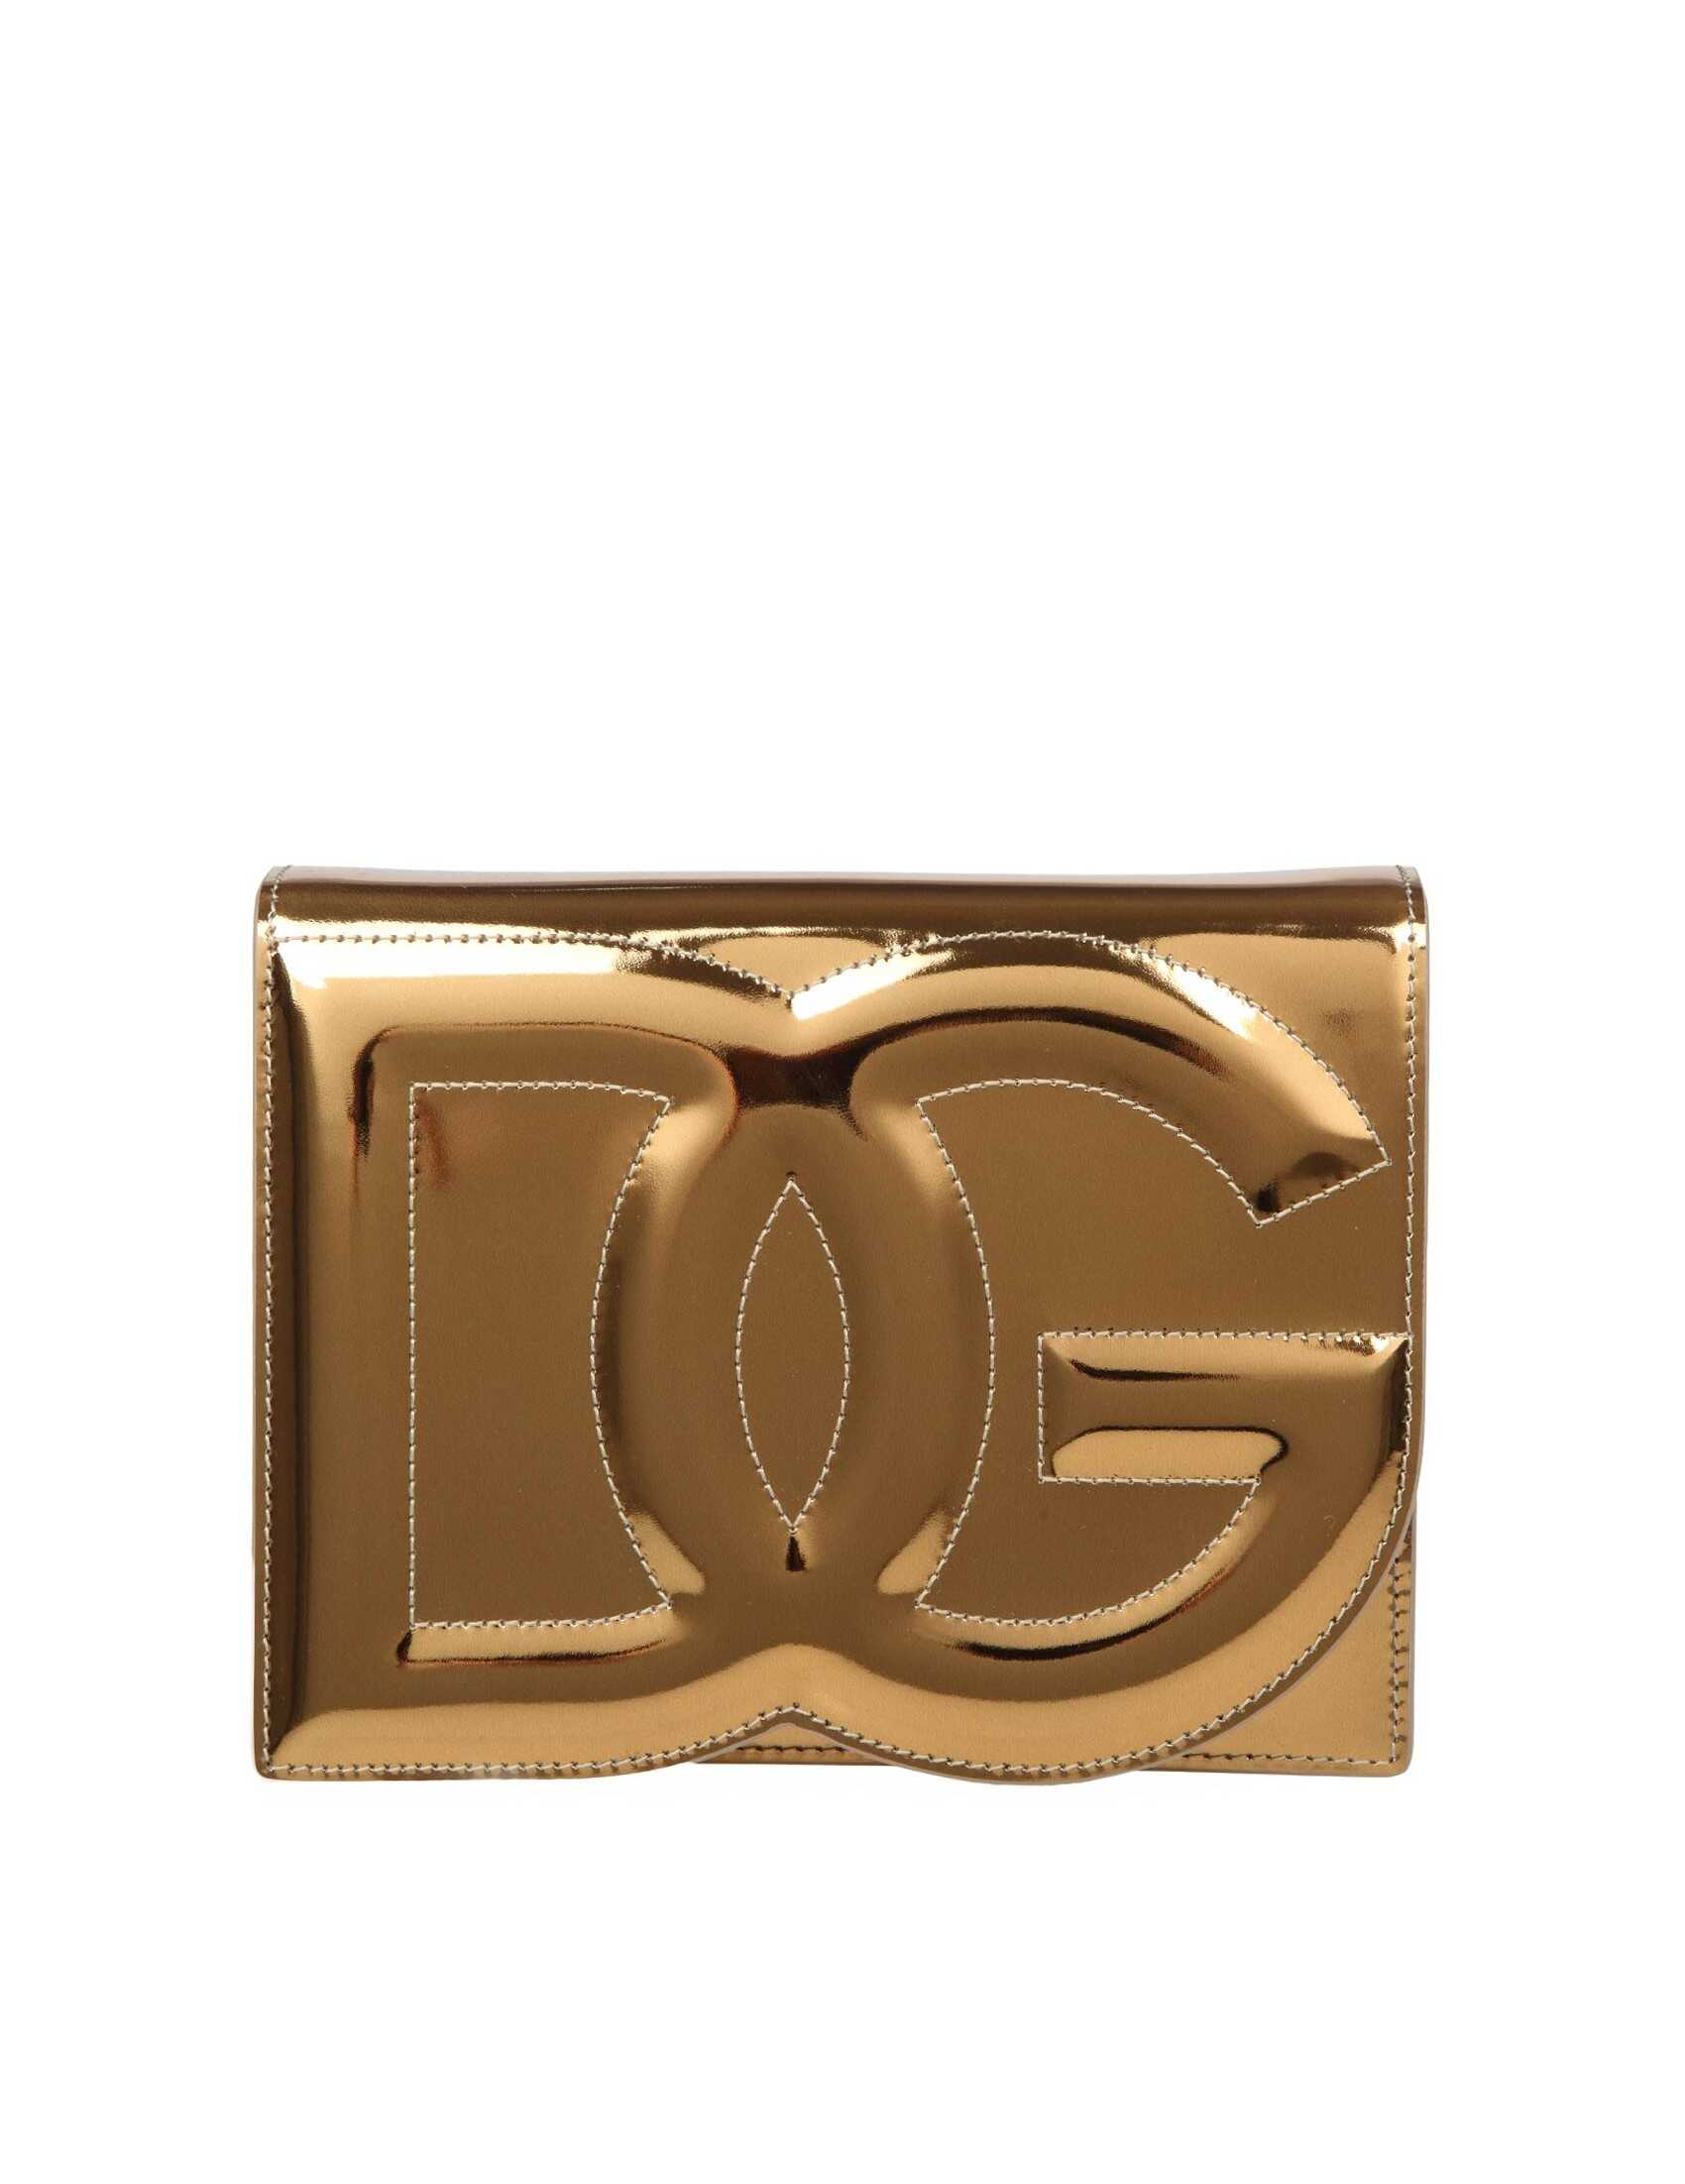 Dolce & Gabbana Dolce & gabbana crossbody bag in gold color laminated leather Gold